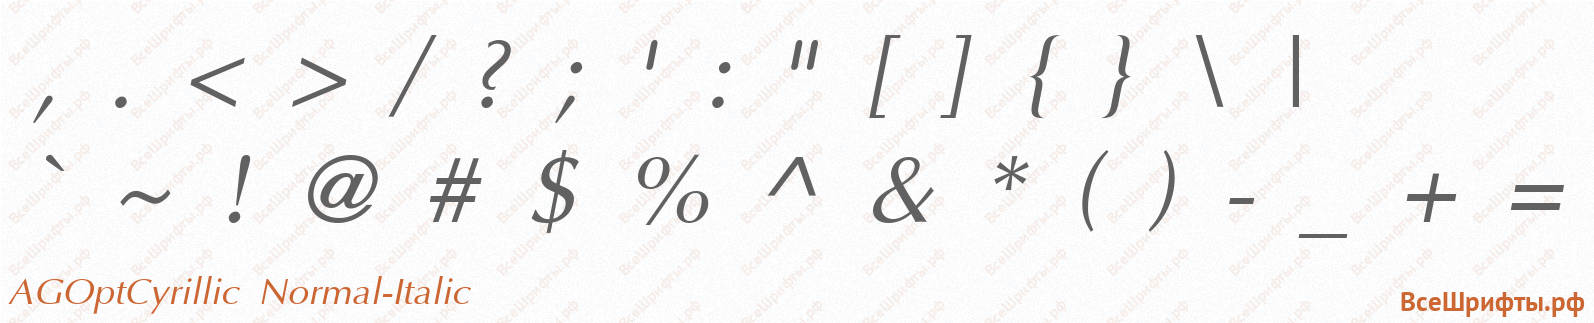 Шрифт AGOptCyrillic Normal-Italic со знаками препинания и пунктуации